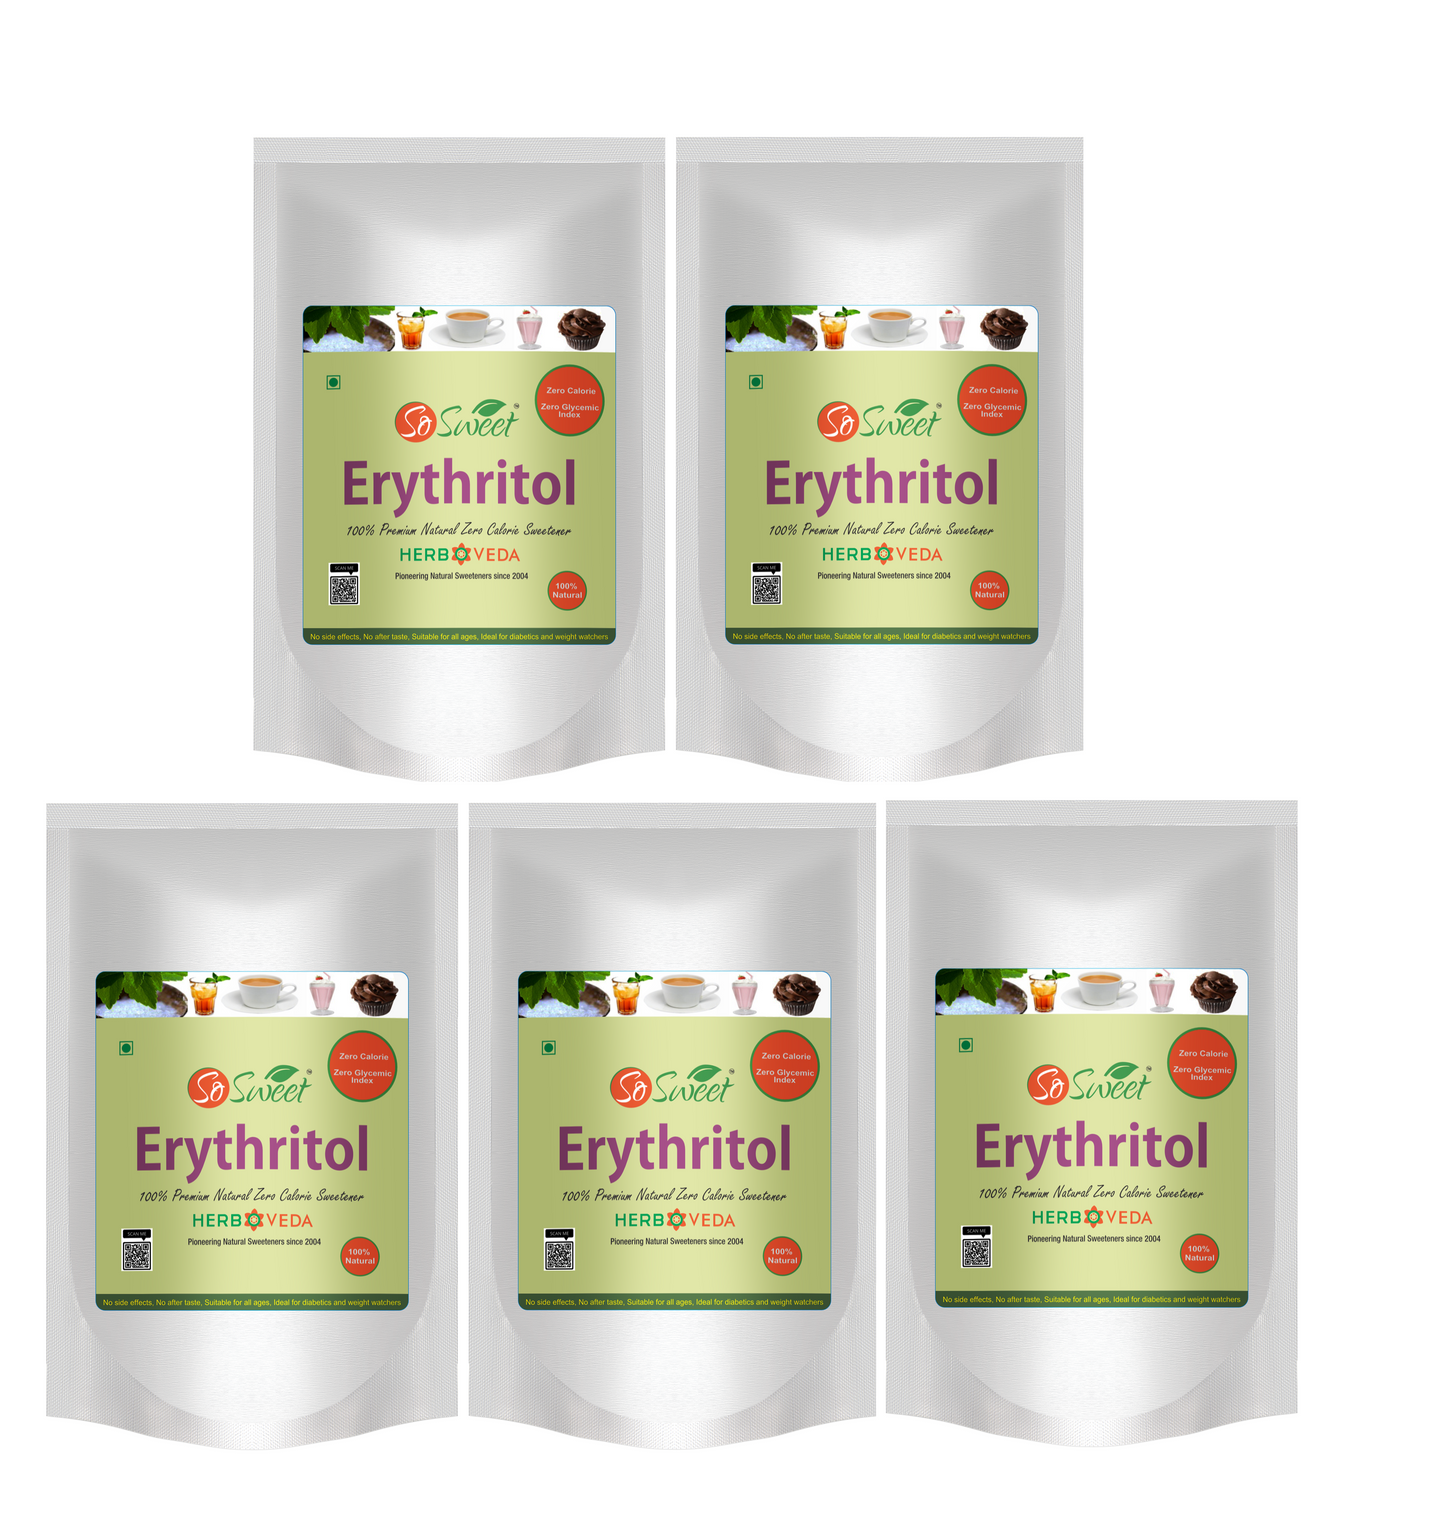 So Sweet Erythritol Sugar Free Natural Zero Calorie Sweetener, 250gm